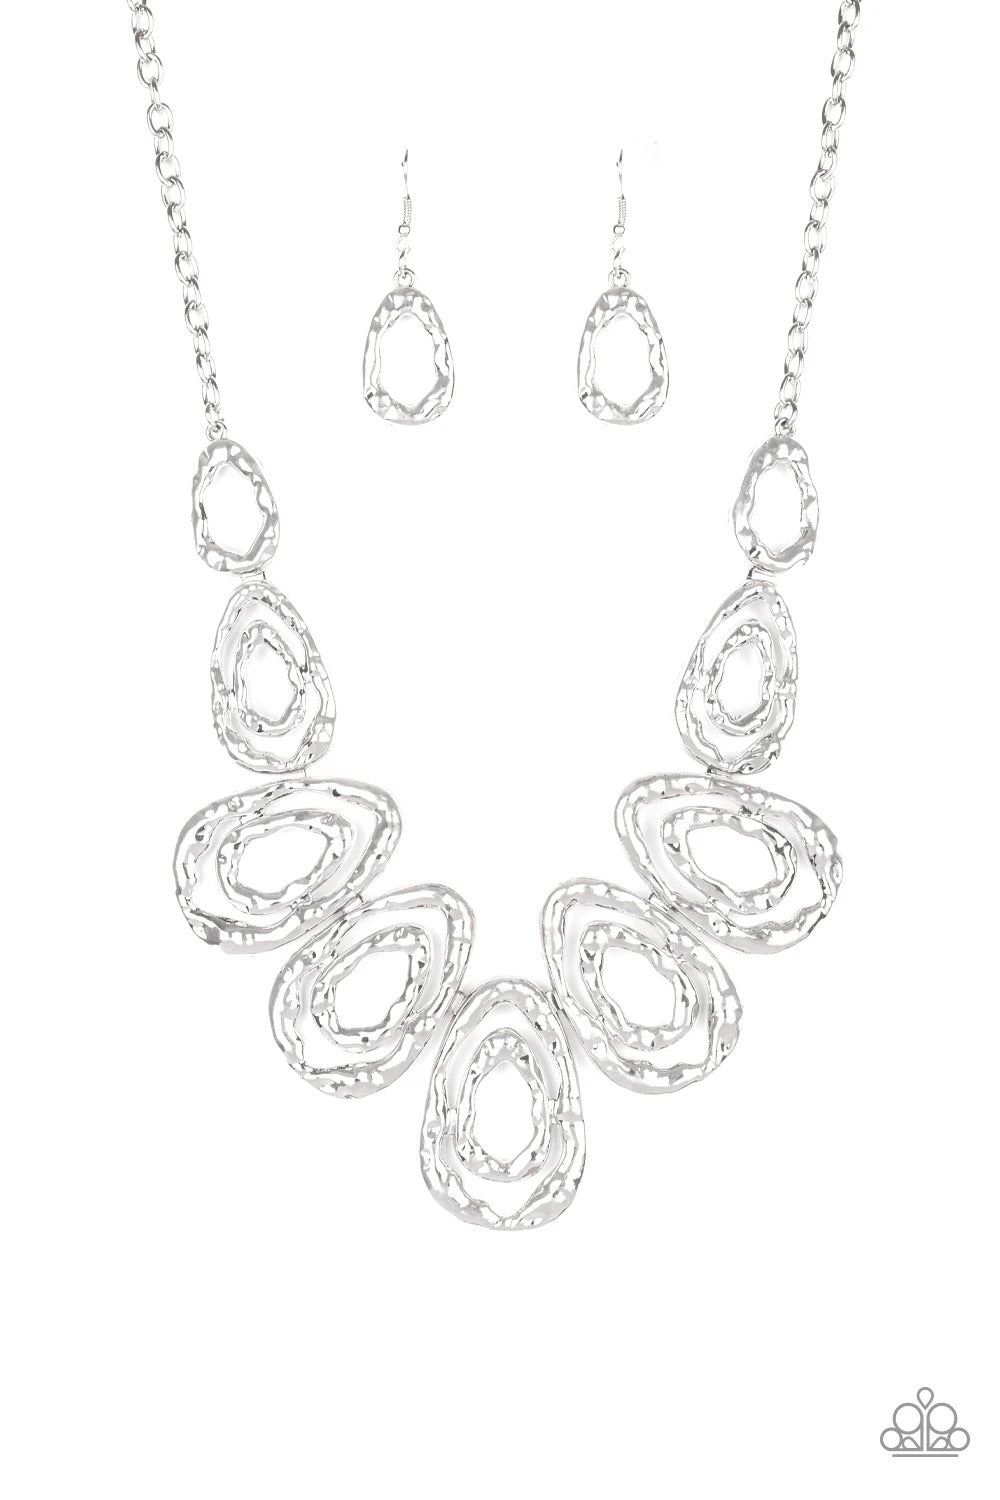 Terra Couture Silver Necklace freeshipping - JewLz4u Gemstone Gallery